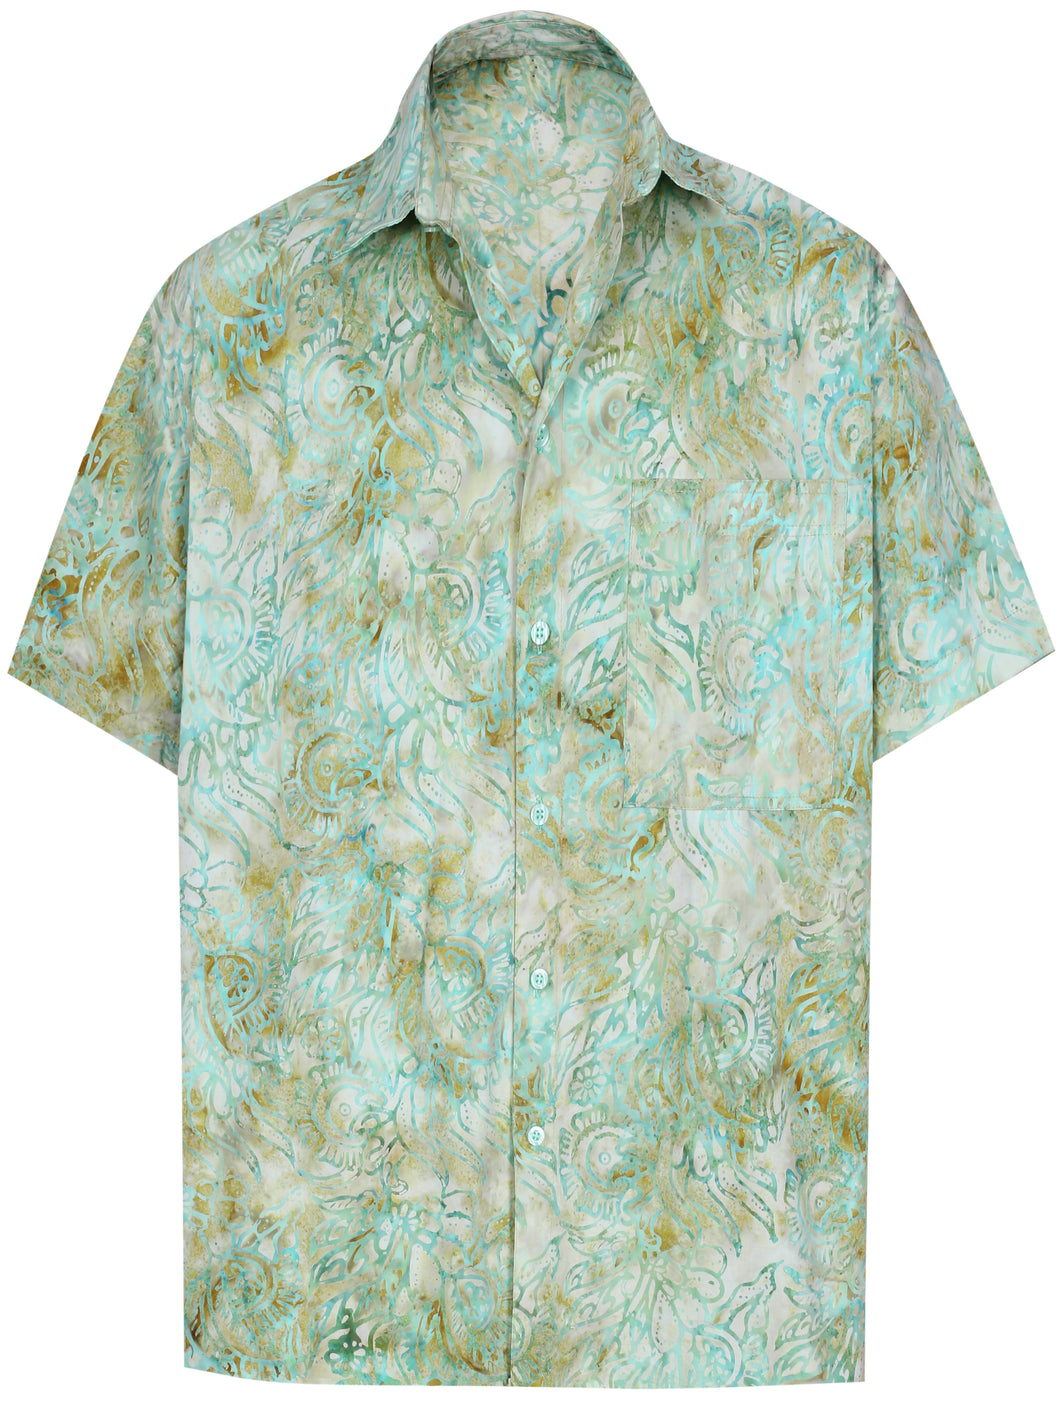 la-leela-men-casual-wear-cotton-hand-batik-printed-sea-green-hawaiian-shirt-size-s-xxl